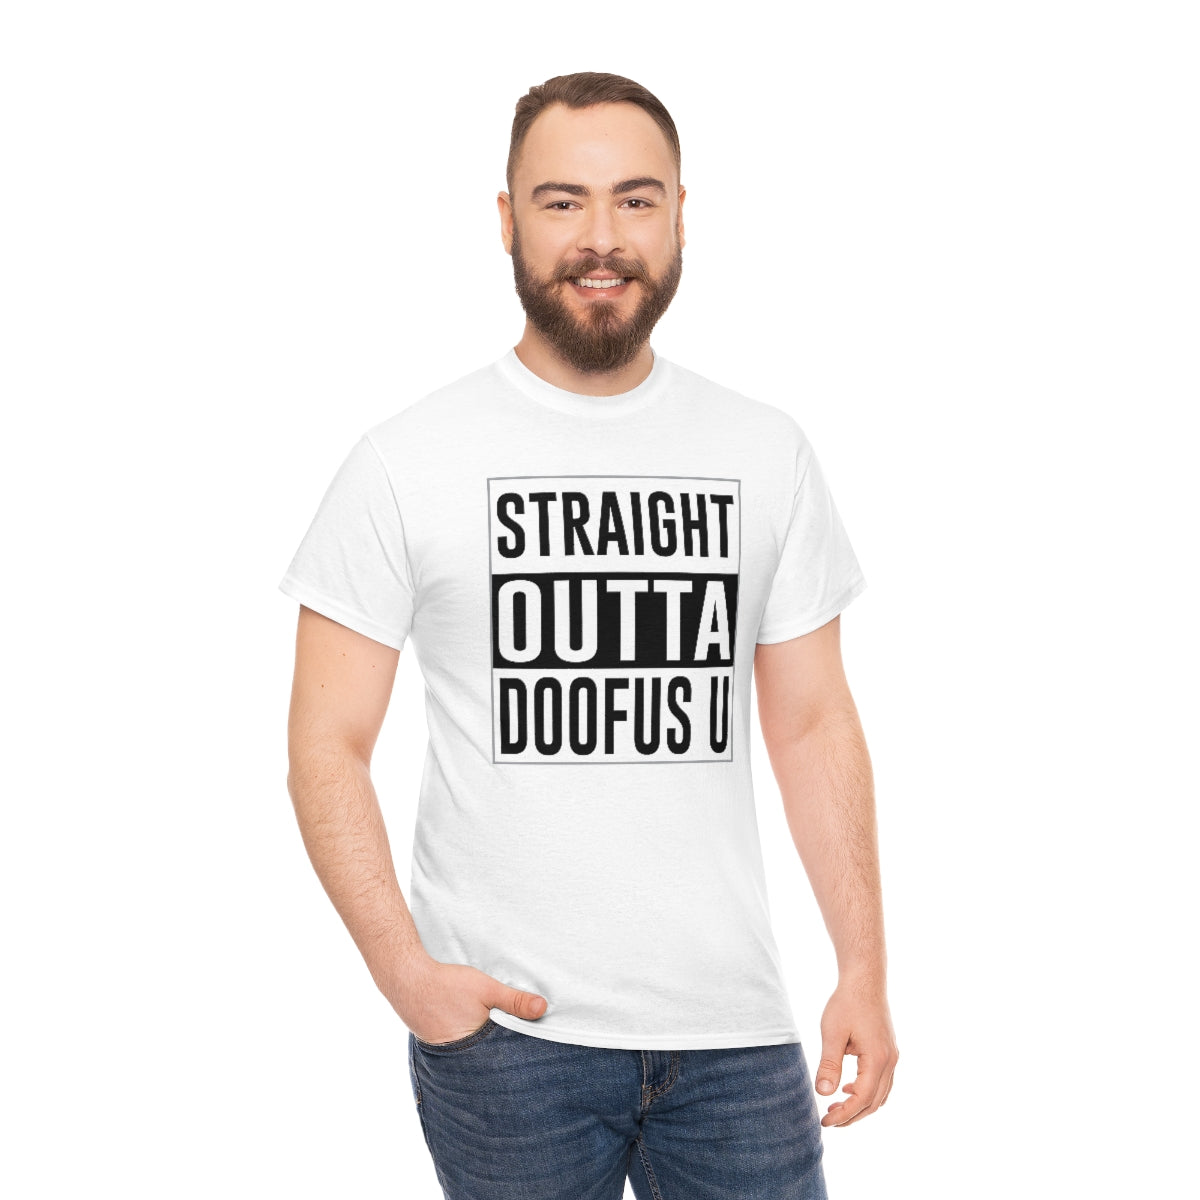 Straight Outta Doofus U™ Unisex Short Sleeve Funny Gift Idea T Shirt